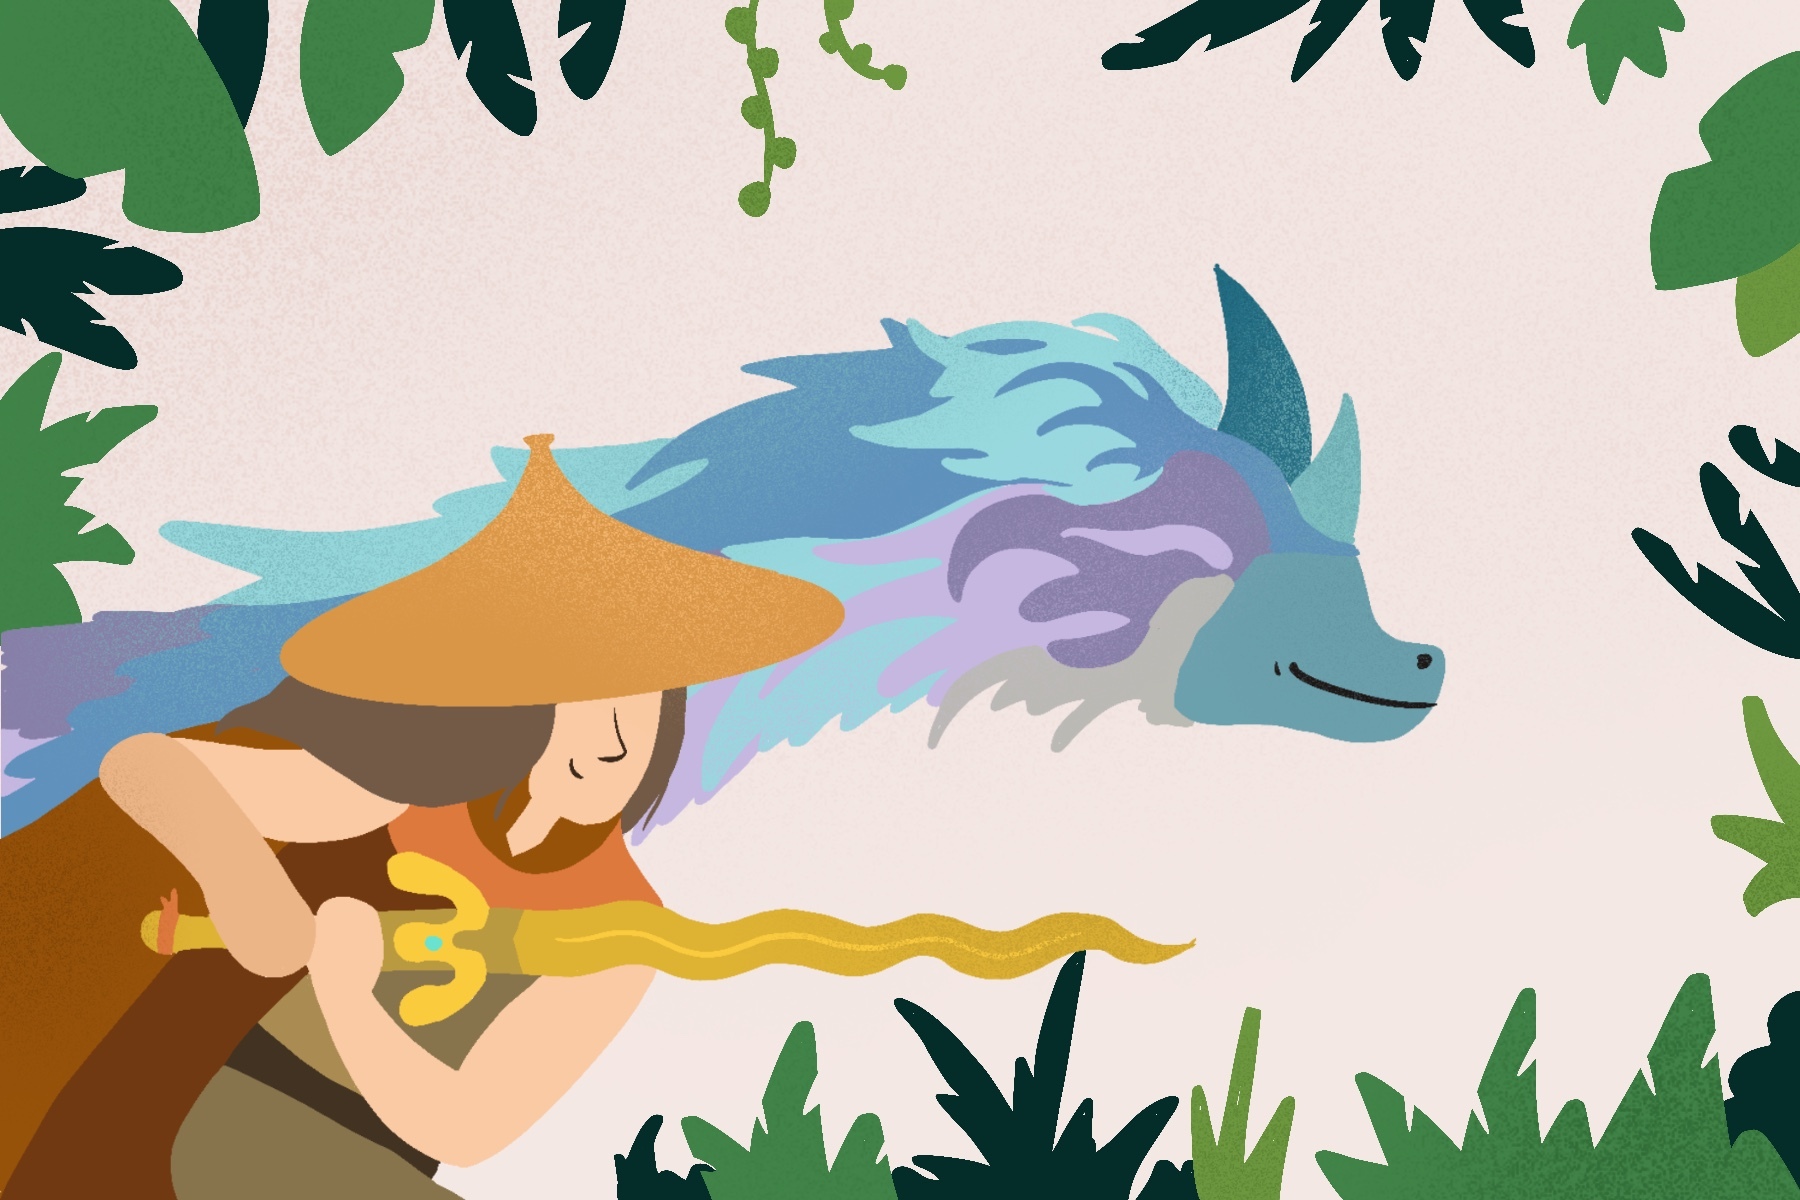 Illustration by Sonja Vasiljeva for an article on Raya and the Last Dragon